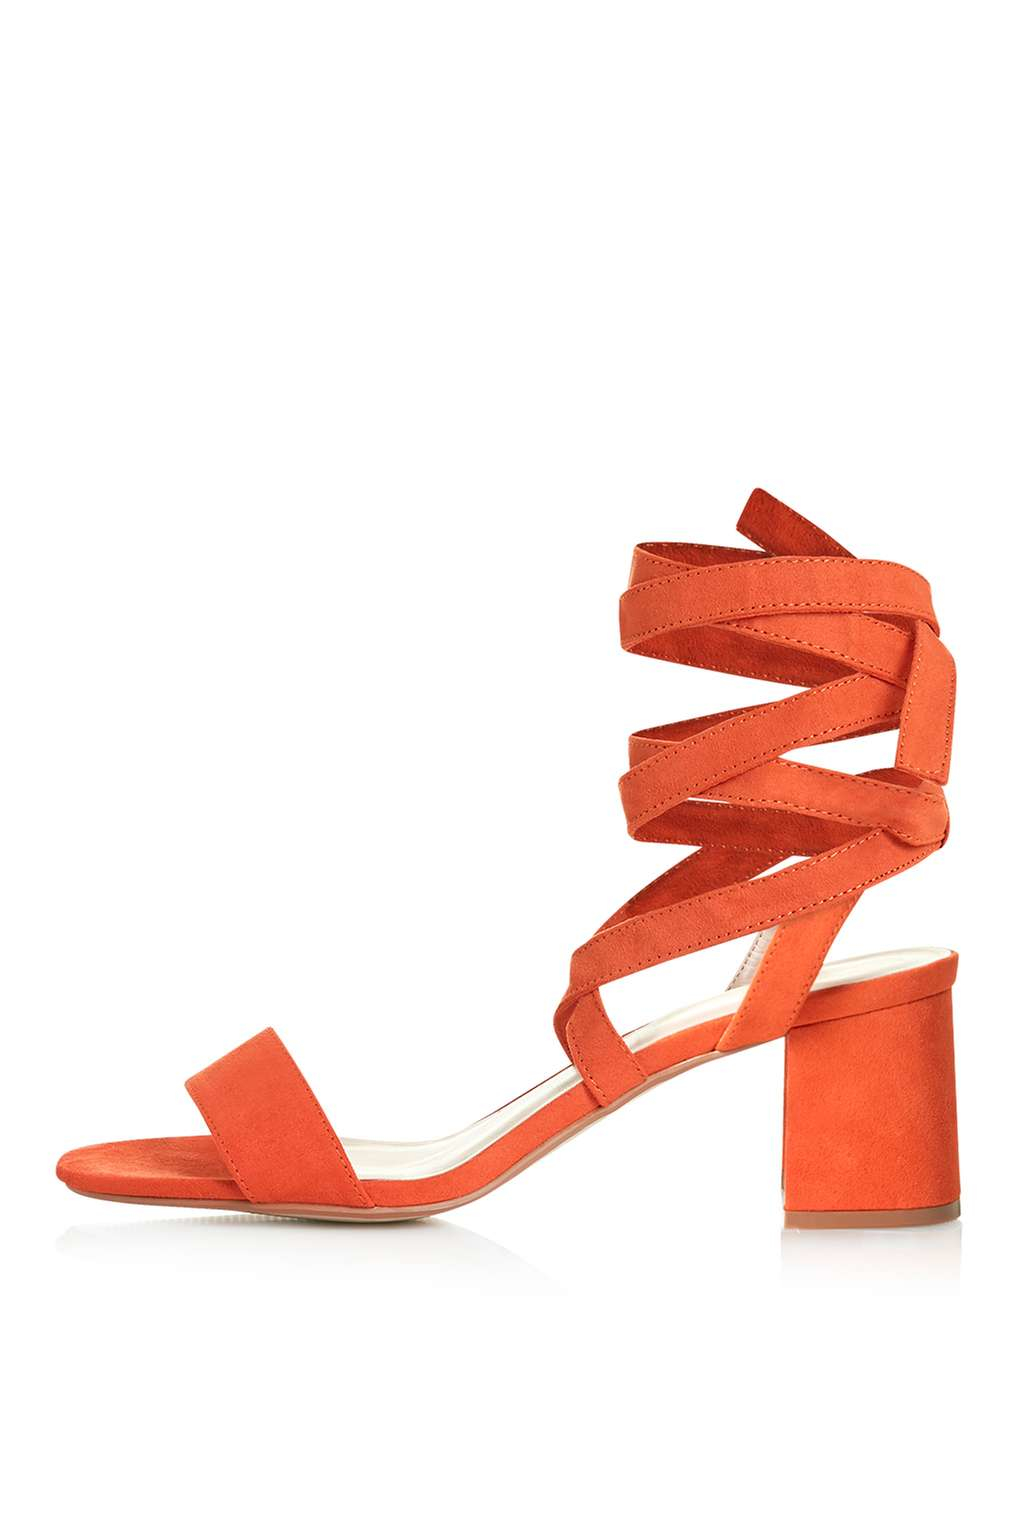 topshop orange sandals